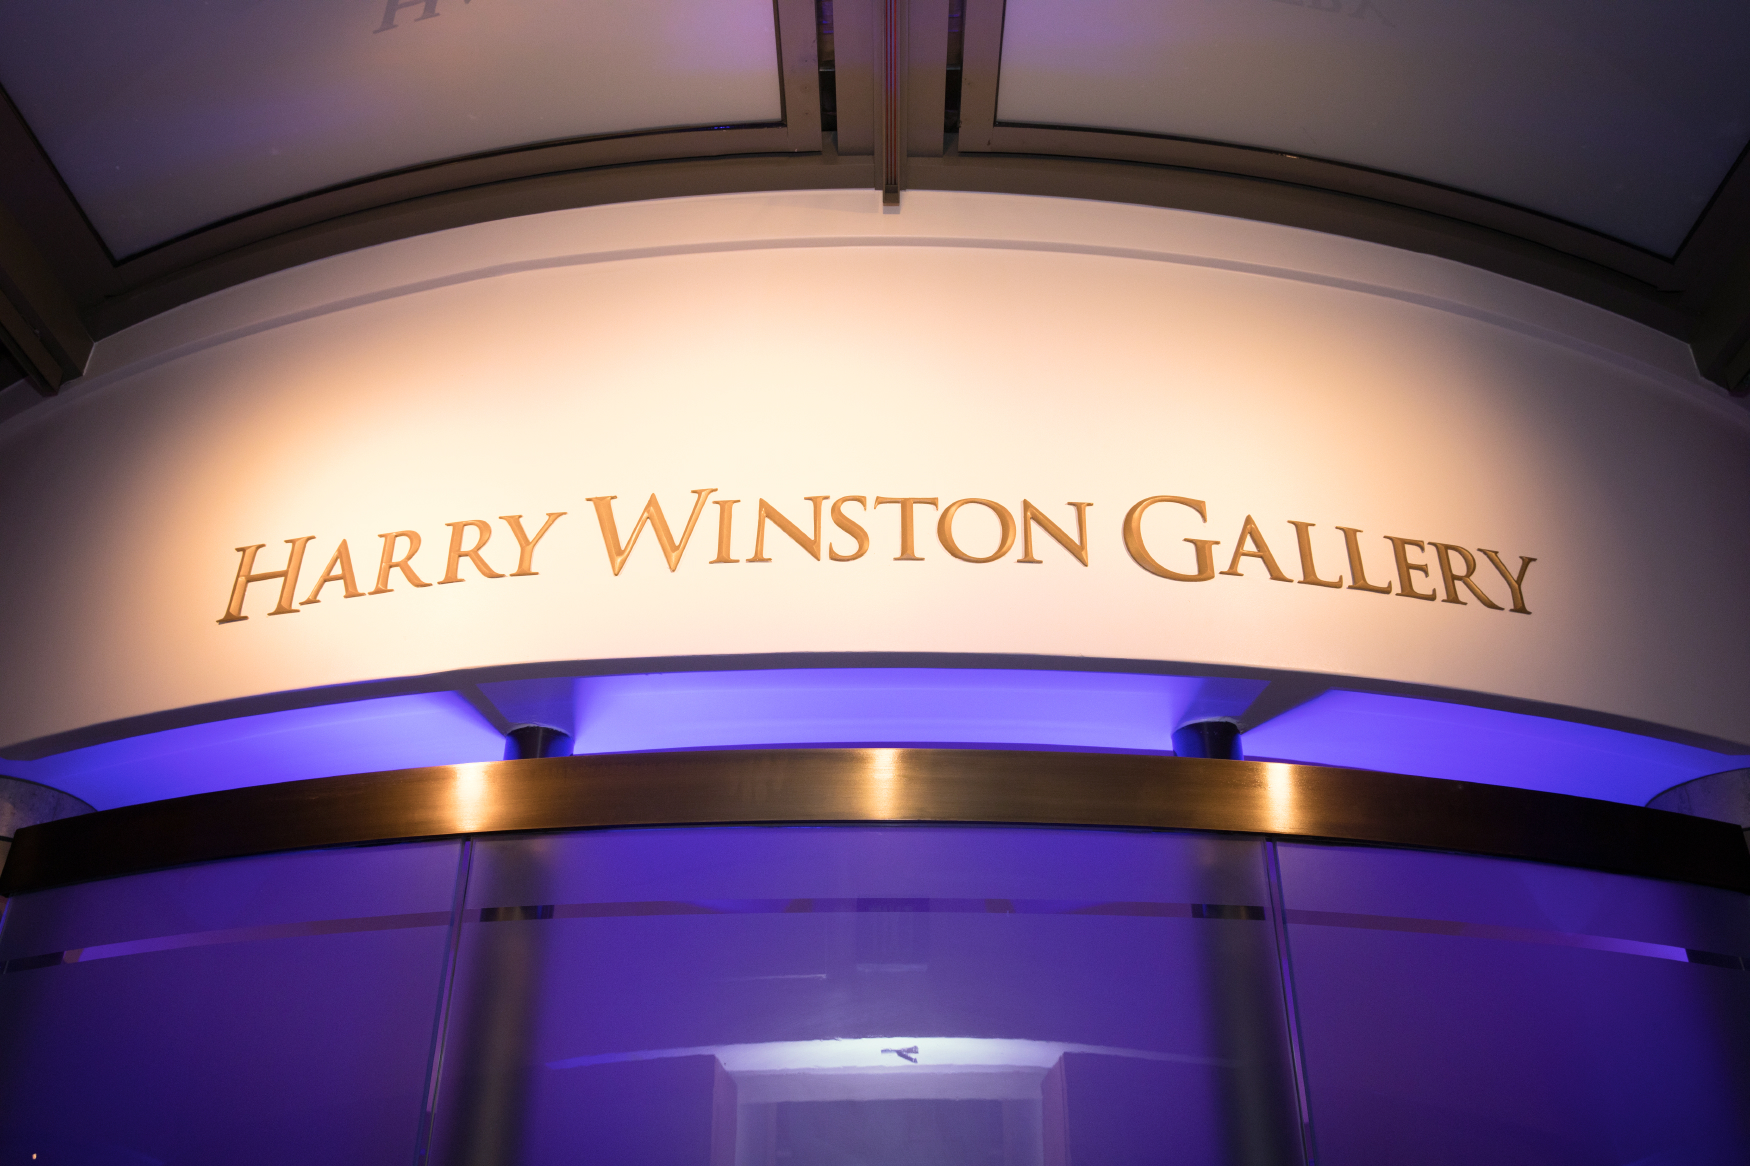 Harry Winston Gallery